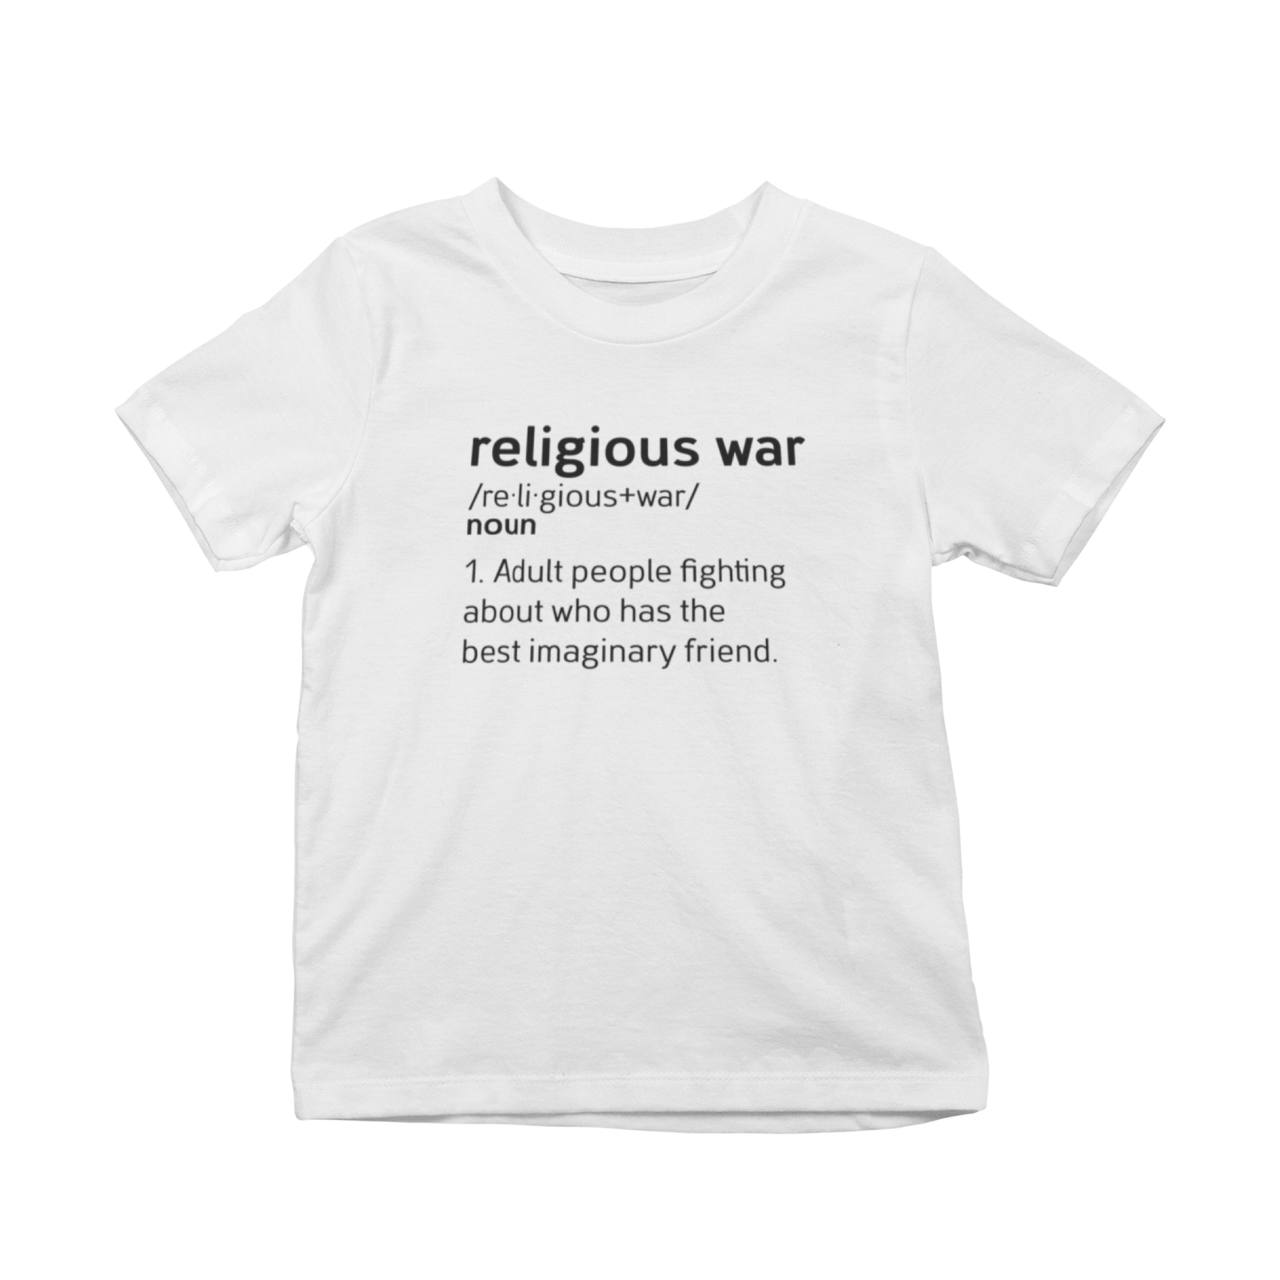 Religious War Definition T-Shirt